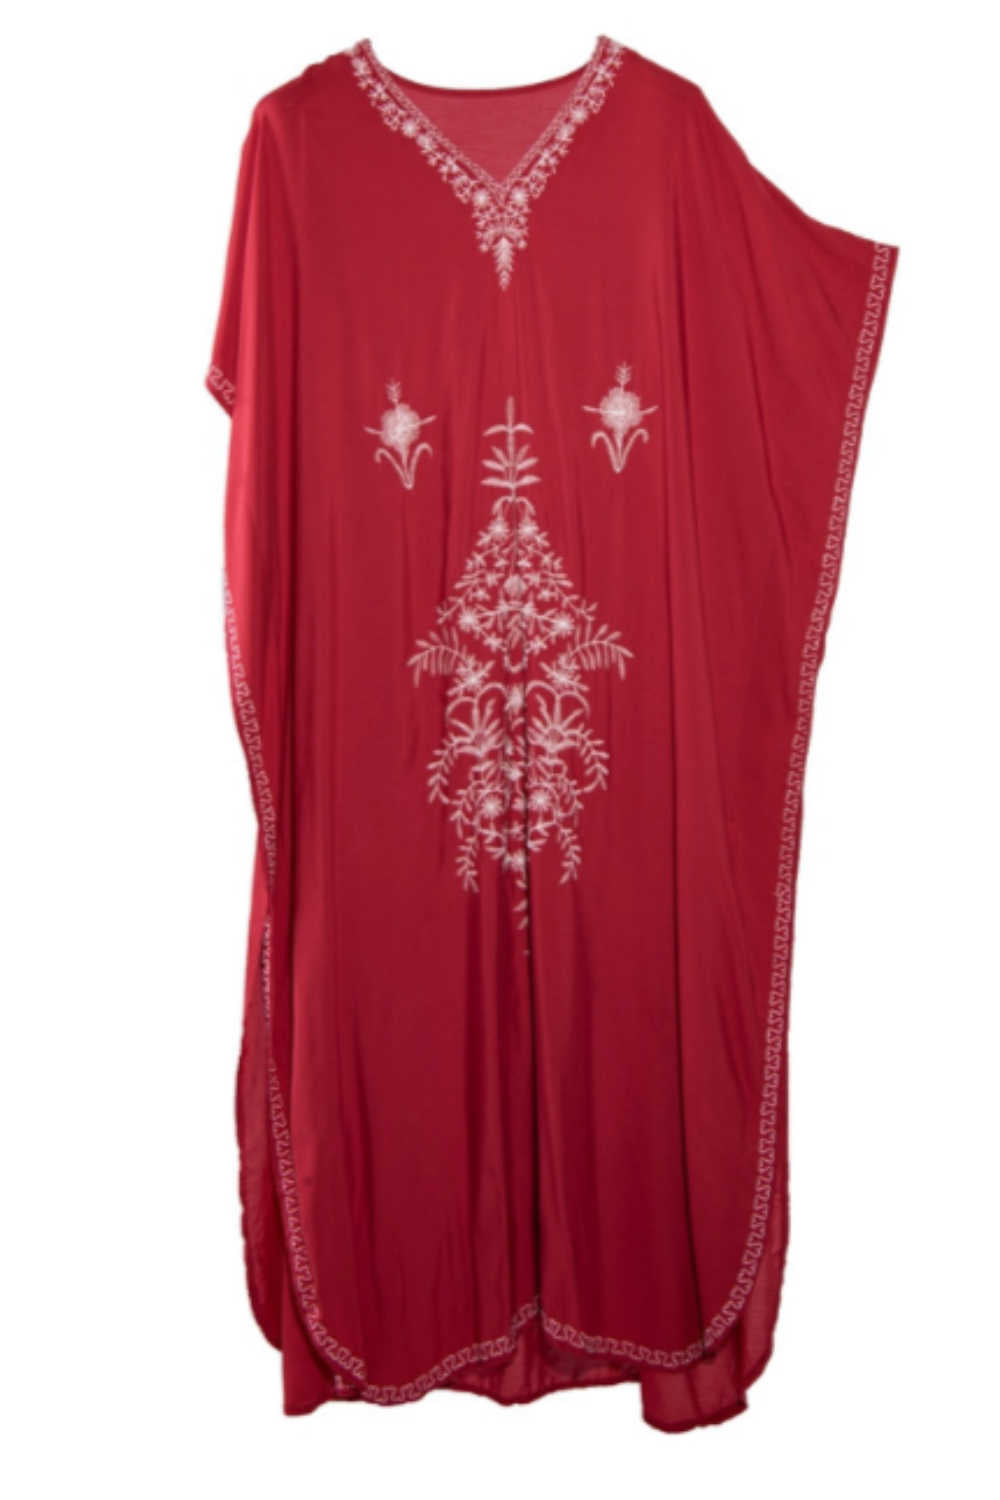 Kaftan-maxi-dress-plus-size-red-white-embroidery-embellishment